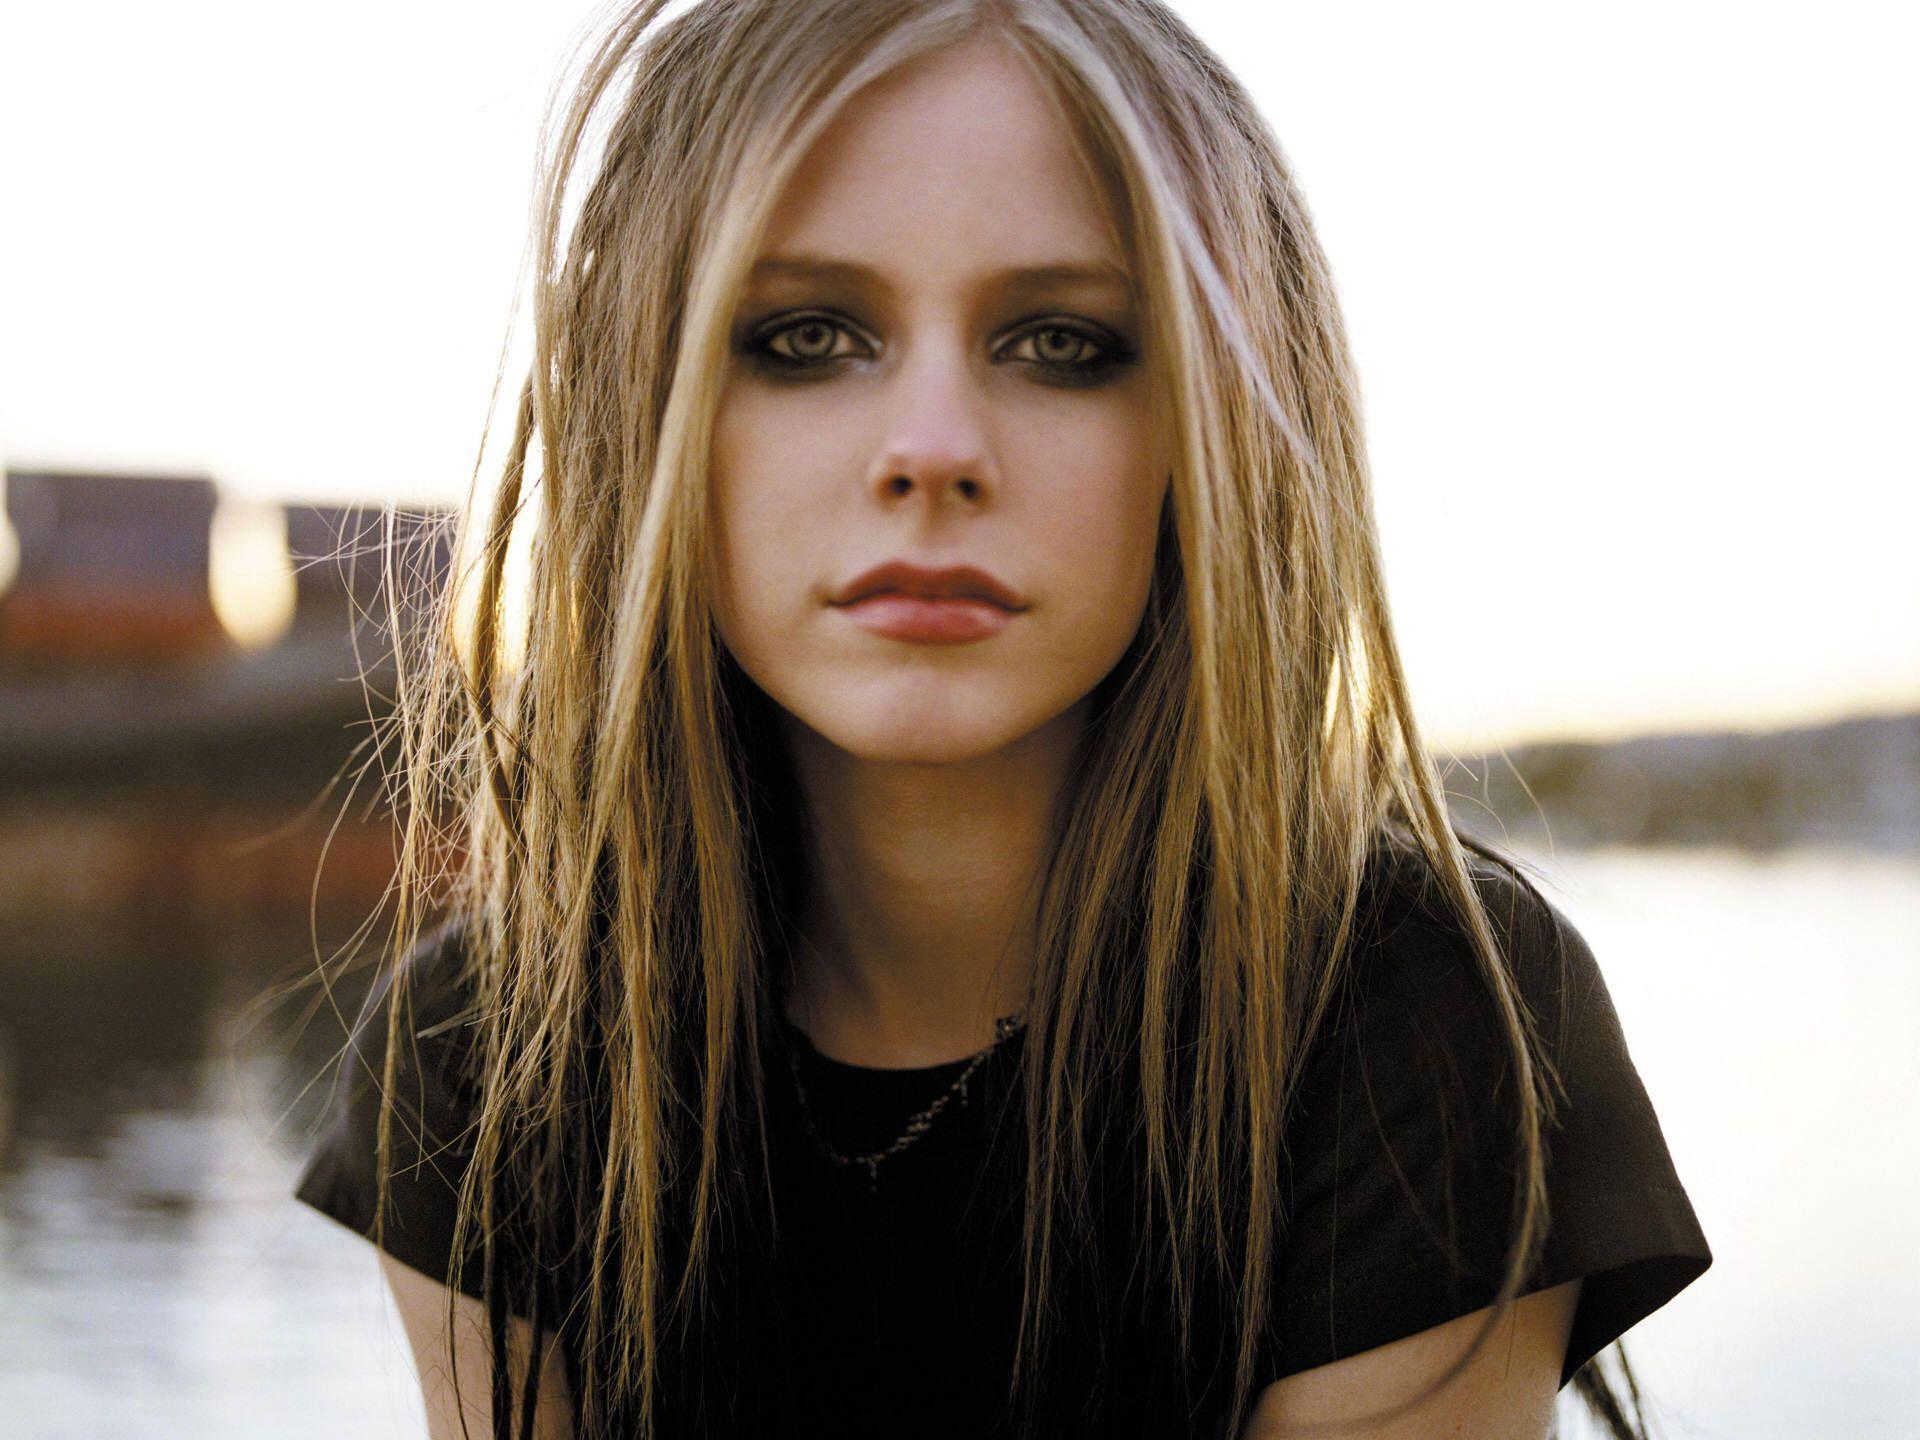 Awesome Avril Lavigne Image 03. hdwallpaper